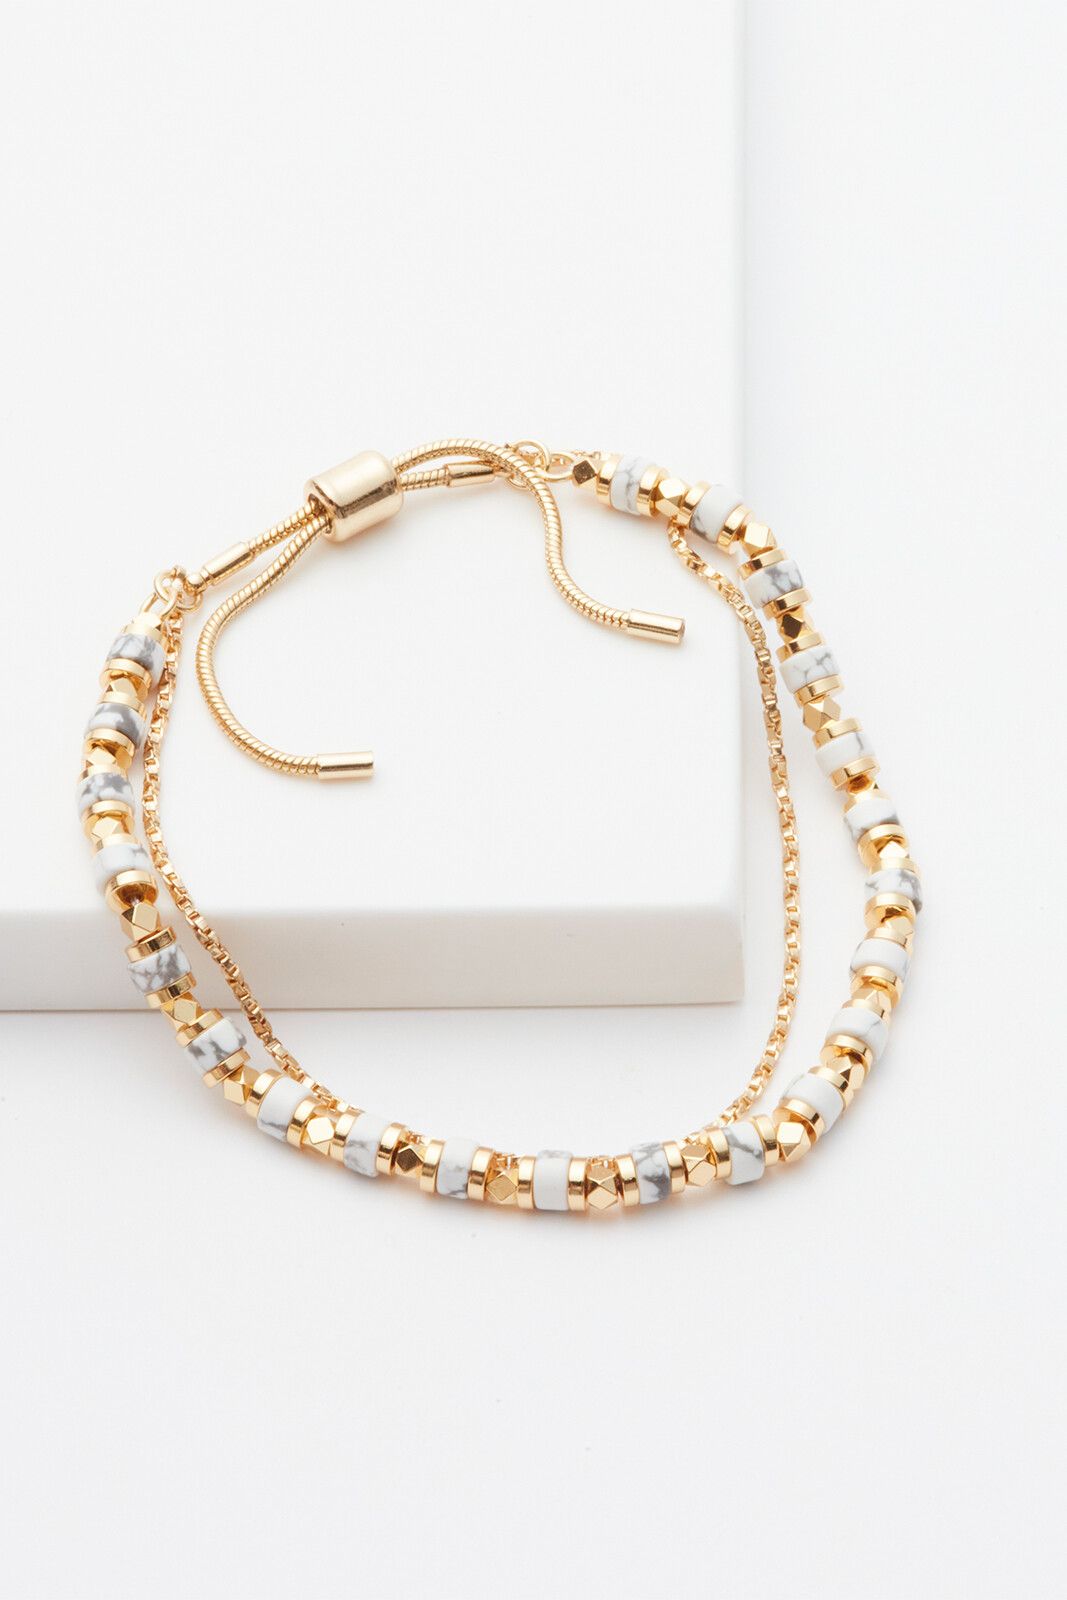 EVEREVE Sarena Marble Chain Bracelet | EVEREVE | Evereve